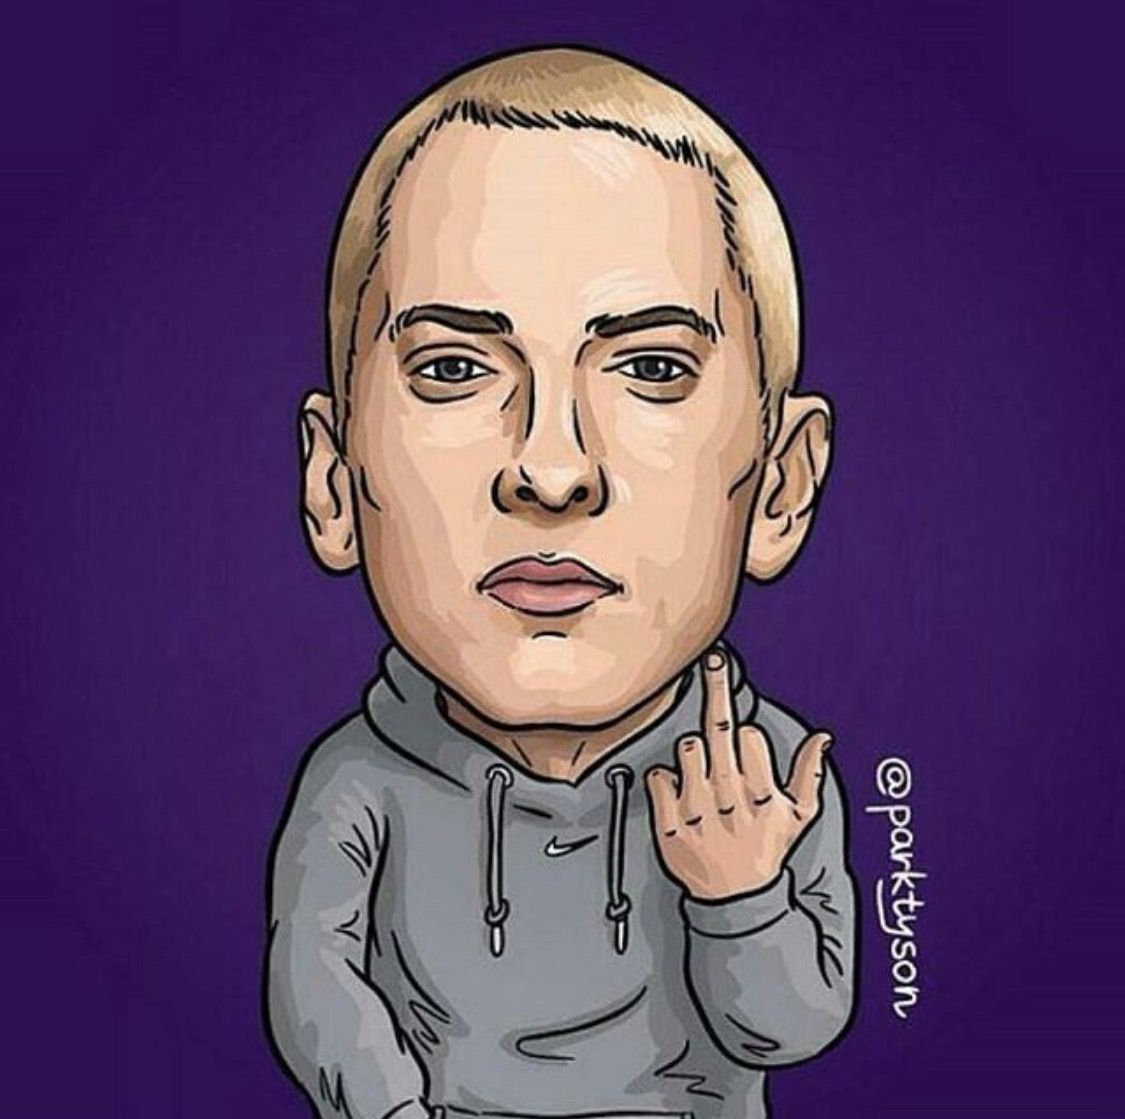 Eminem Wallpapers Art : Find the best eminem hd wallpapers on